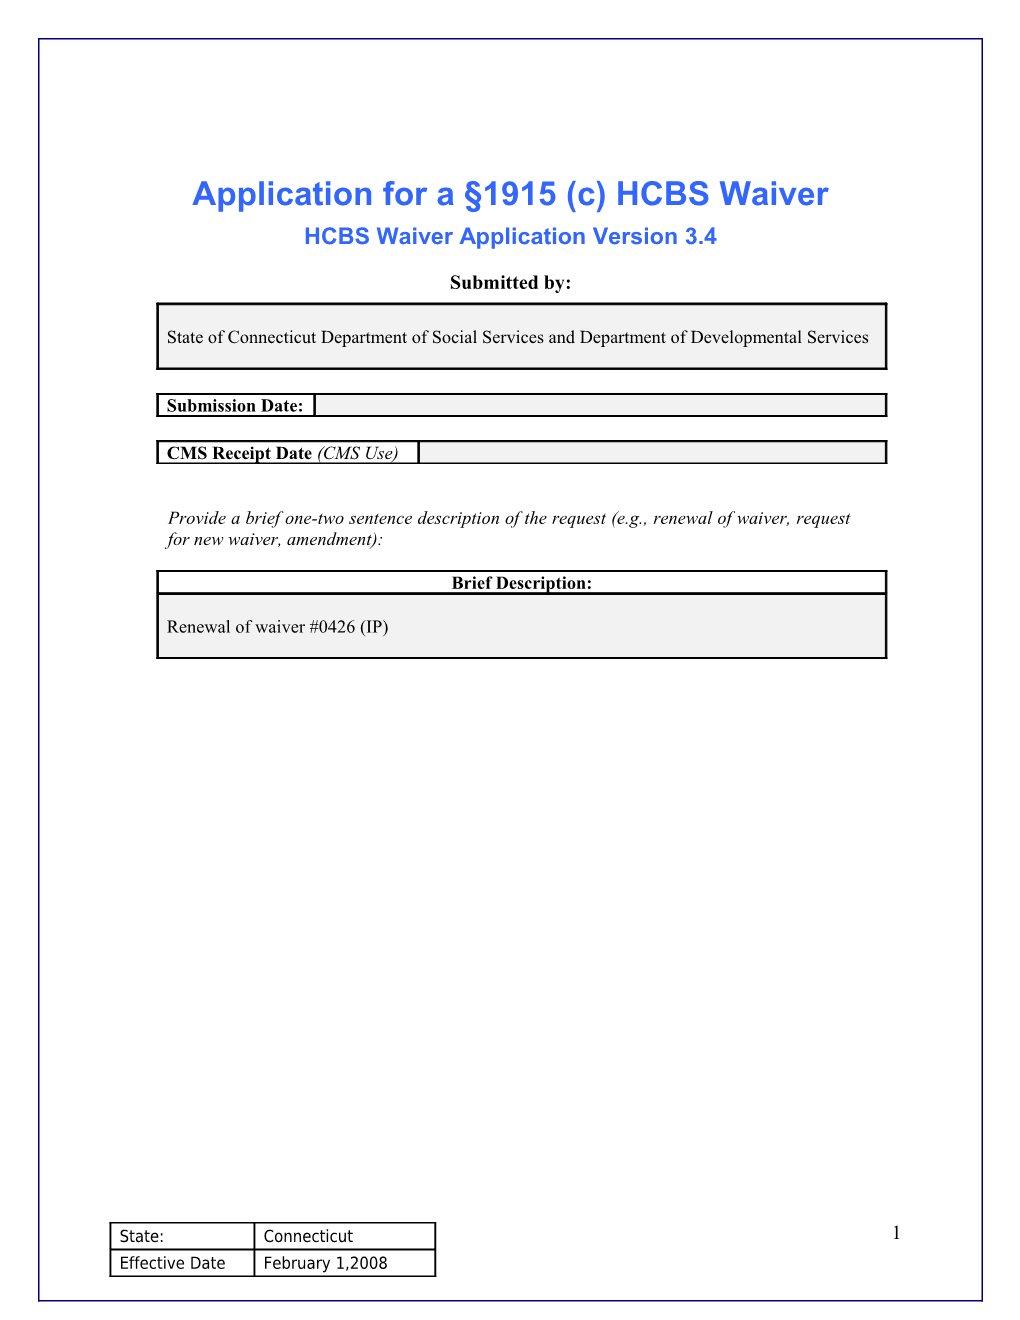 Appendix C-3: Waiver Services Specifications